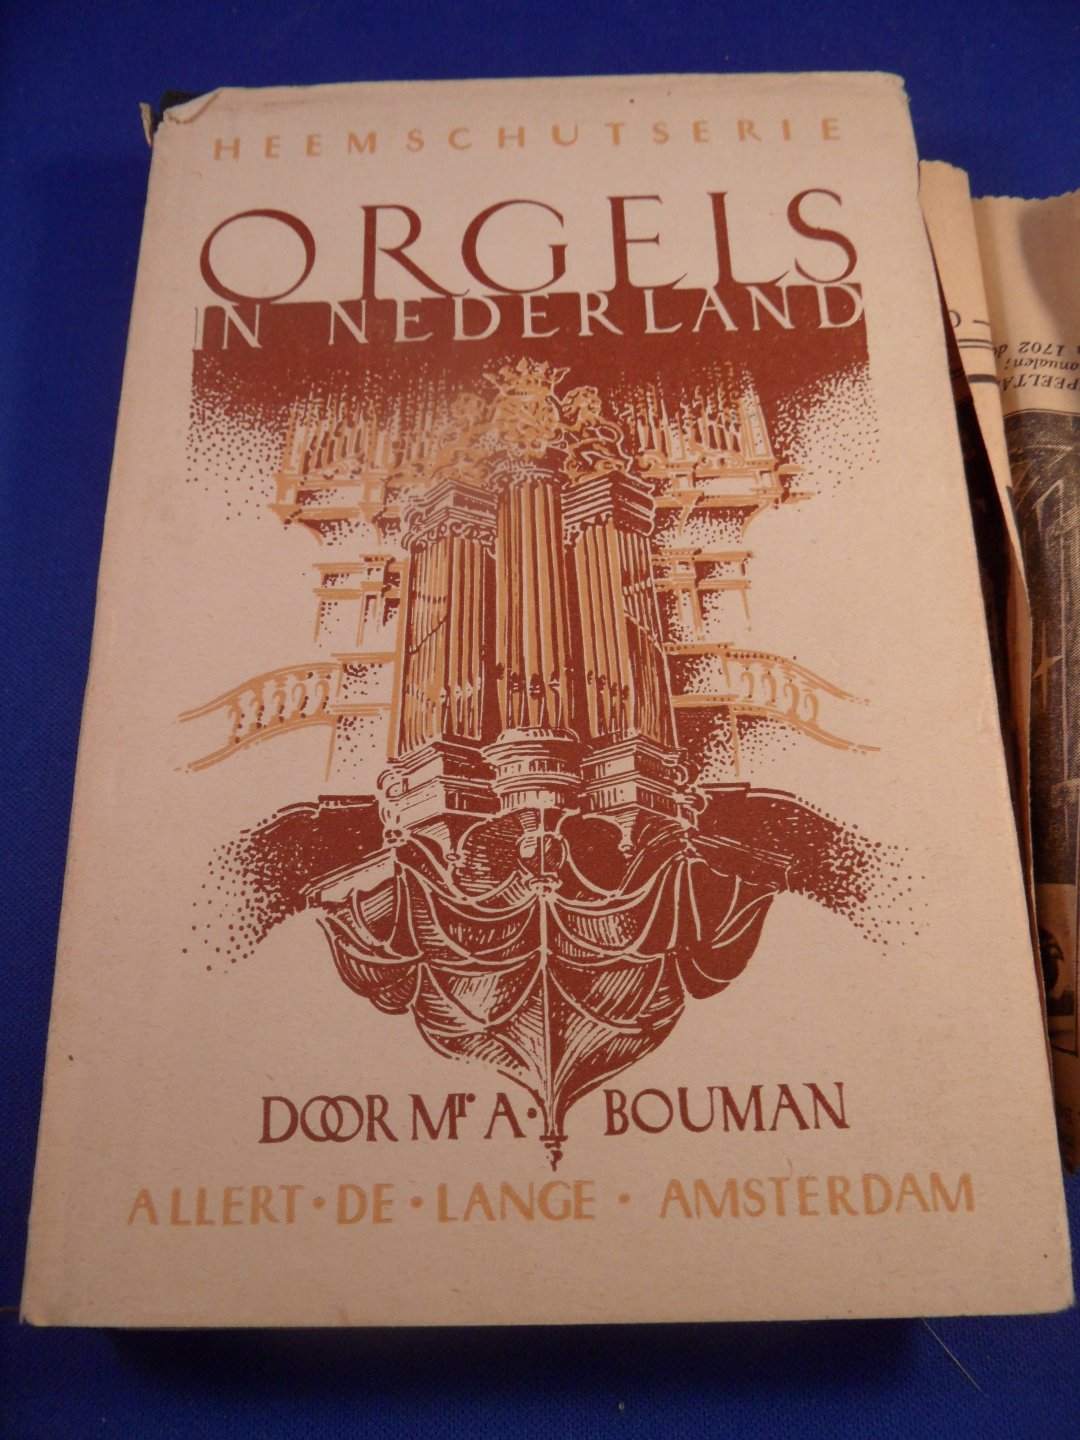 Bouman, mr. A.  - Orgels in nederland